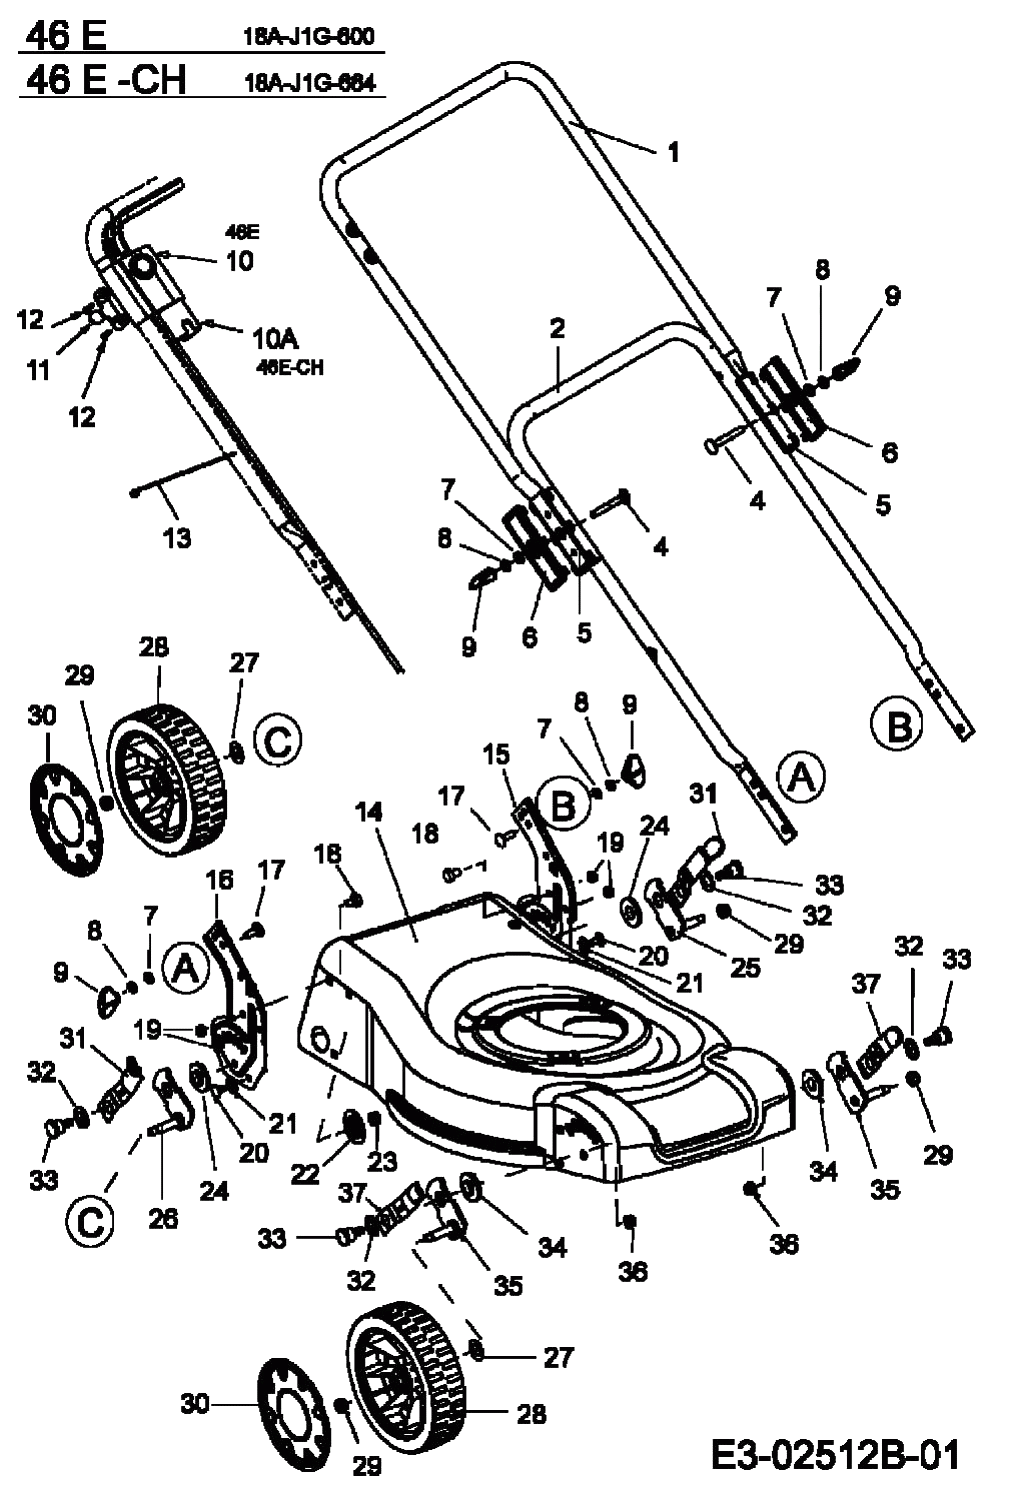 MTD Артикул 18A-J1G-664 (год выпуска 2006). Ручка, колеса, регулятор высоты реза